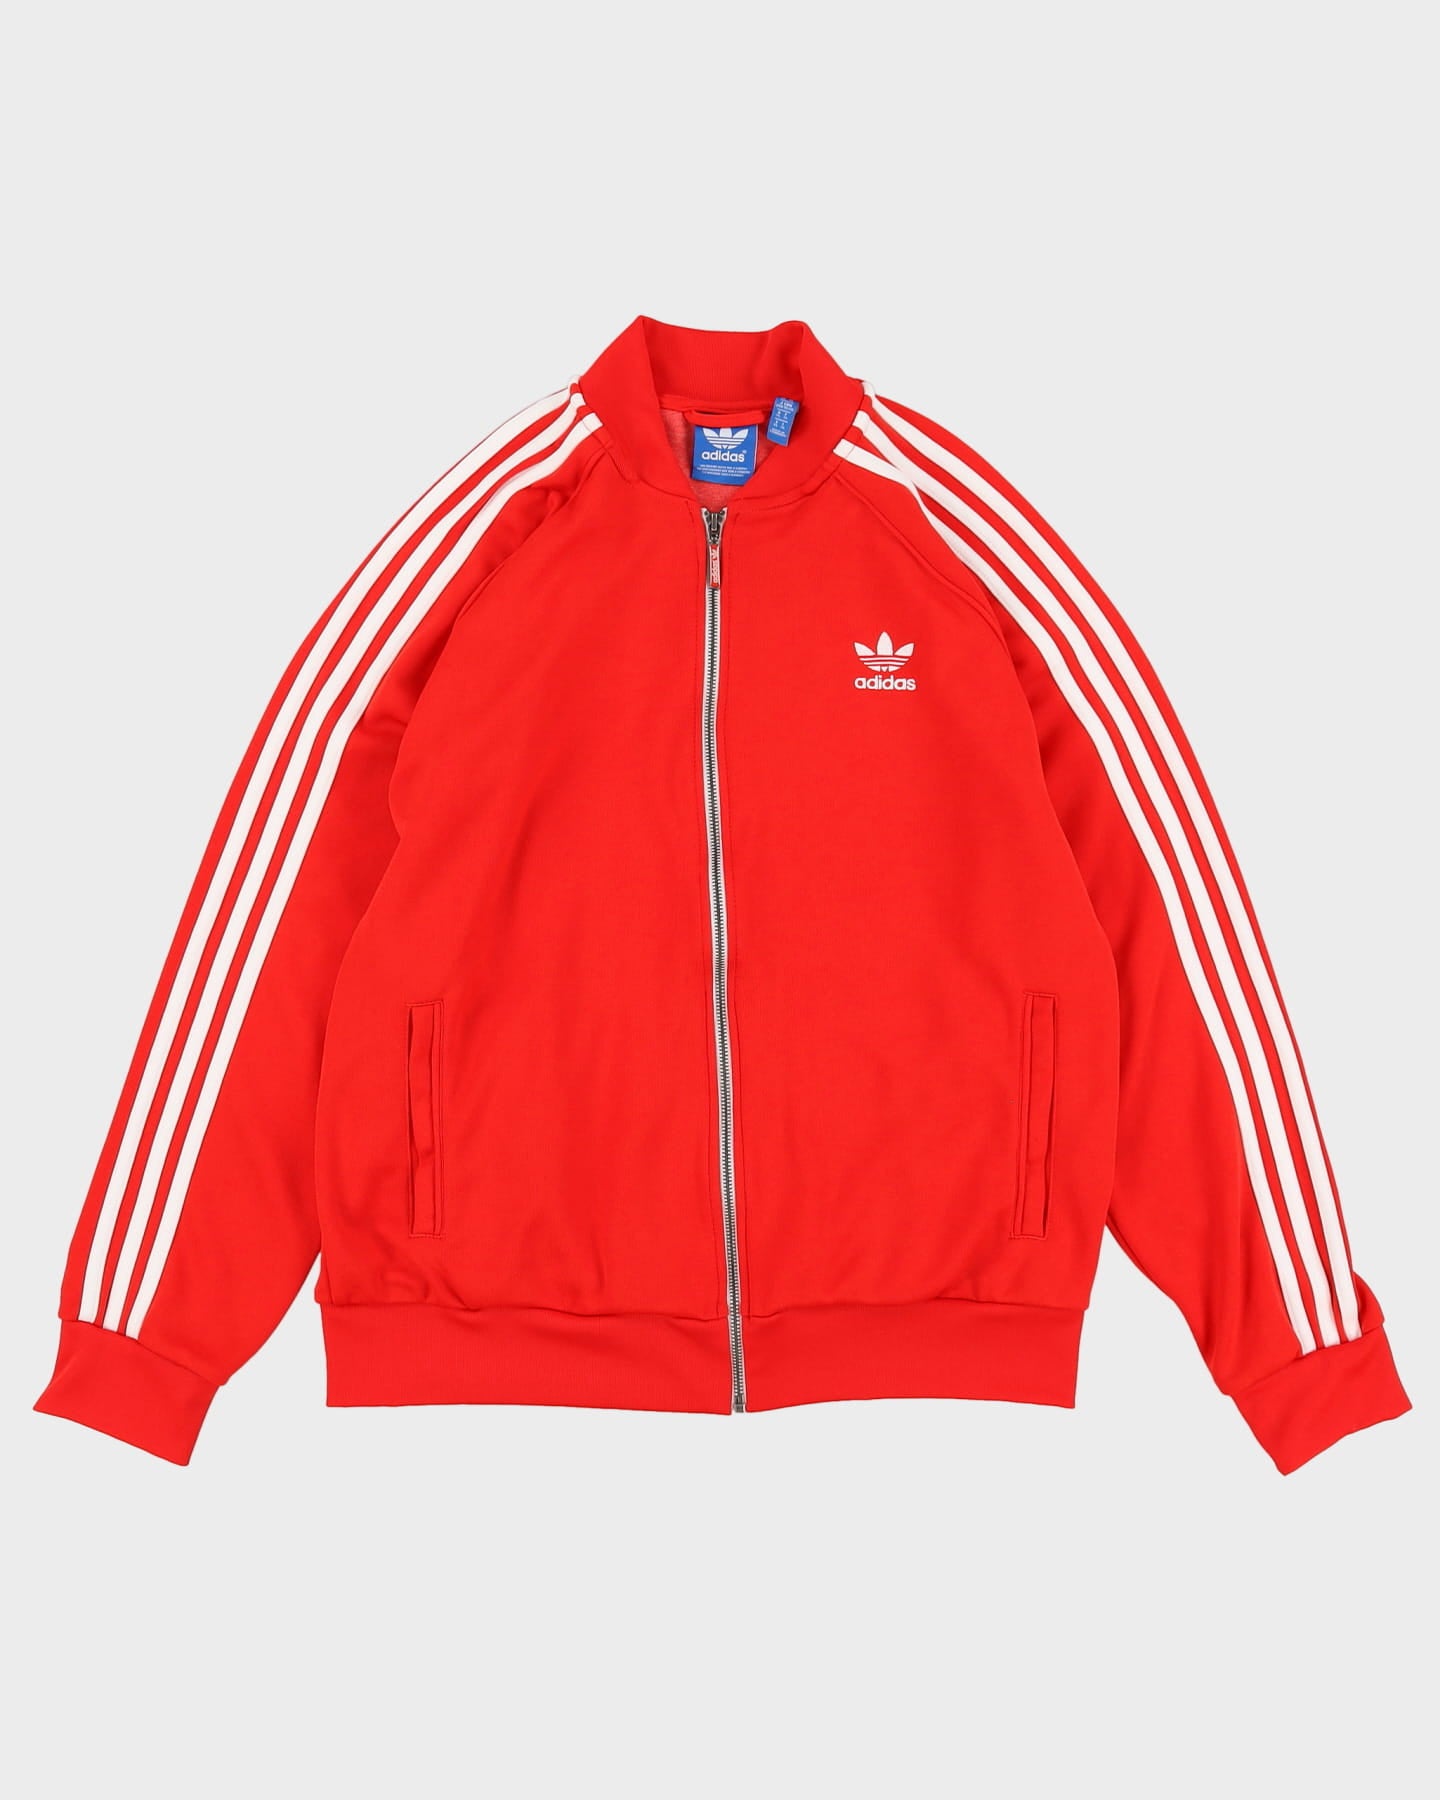 Adidas Red Track Jacket - XL